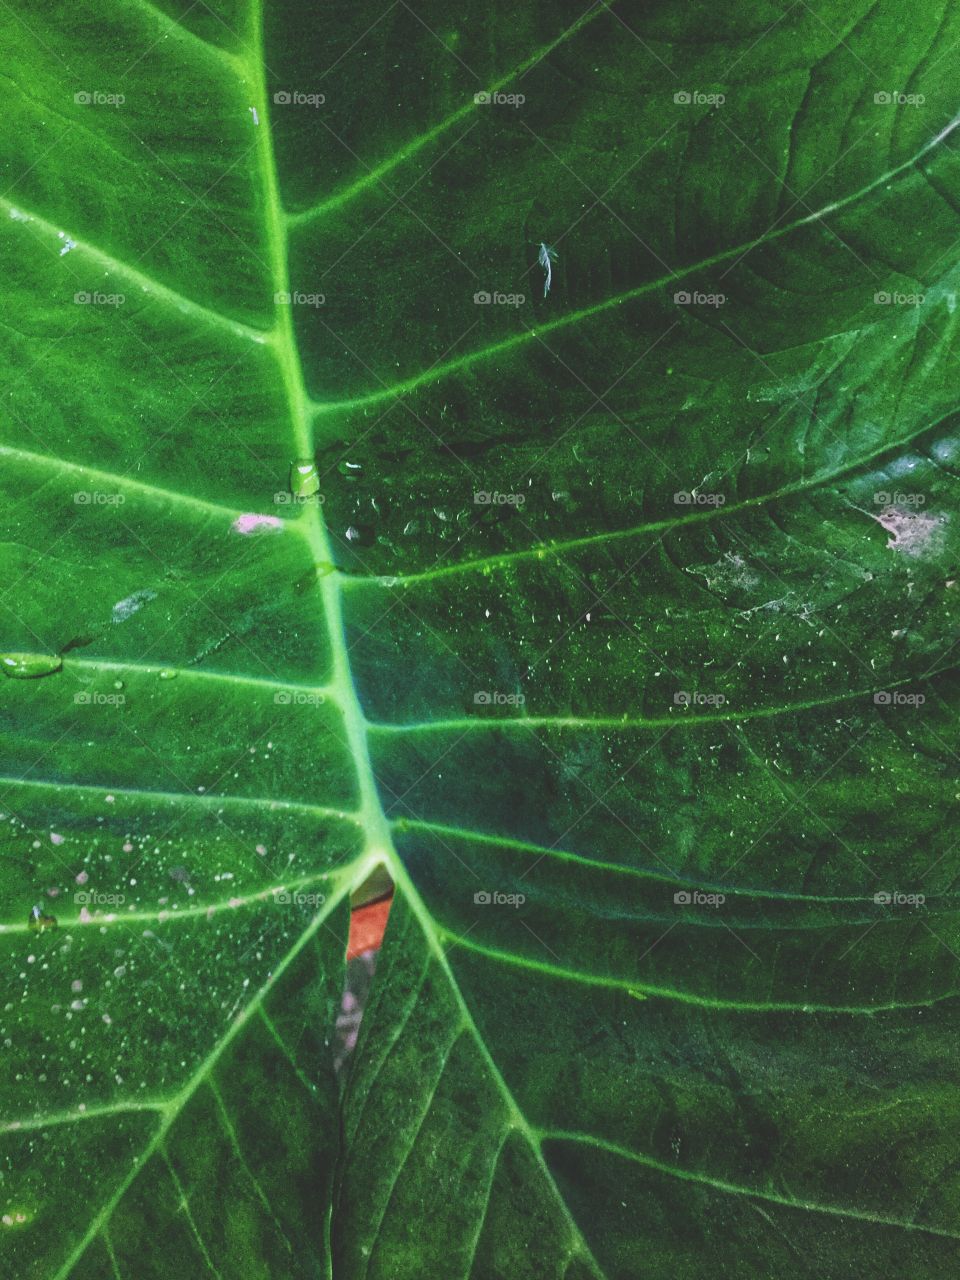 Leaf Vains